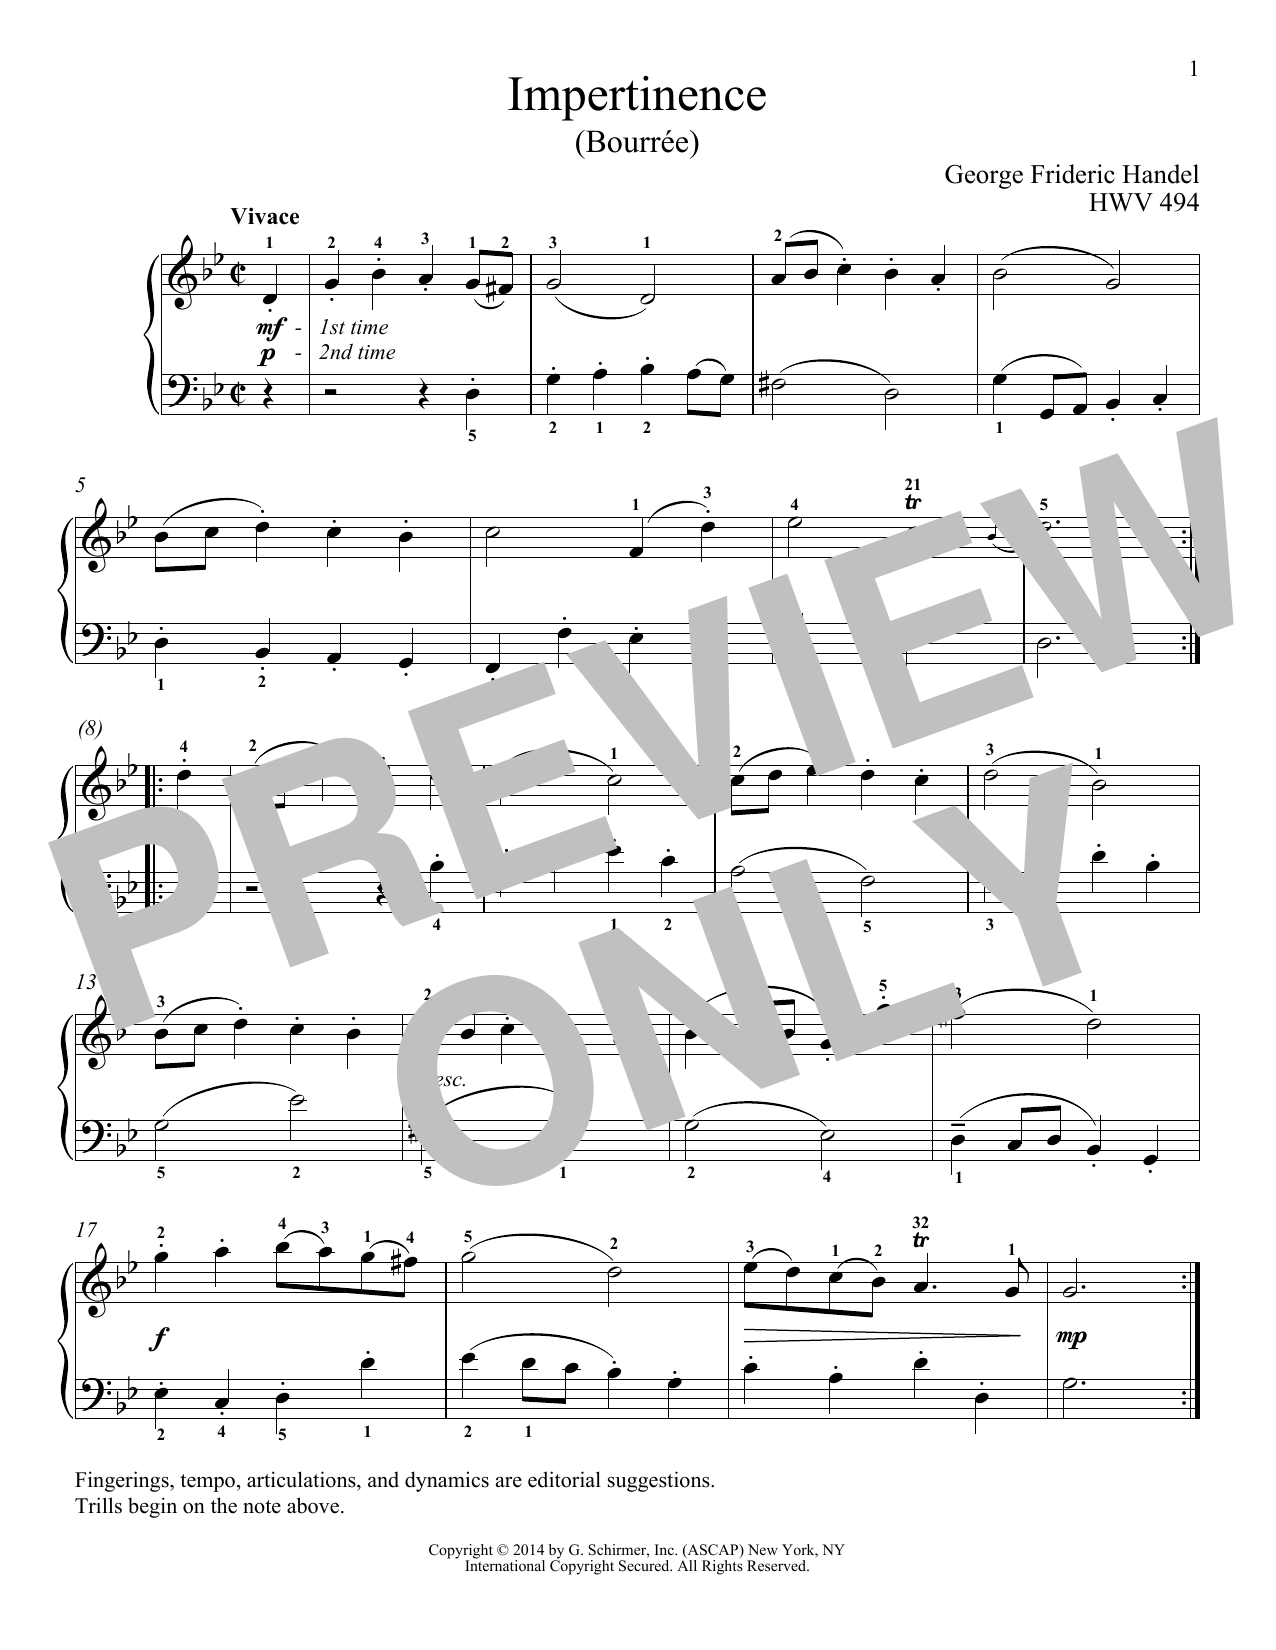 Download George Frideric Handel Impertinence, HWV 494 Sheet Music